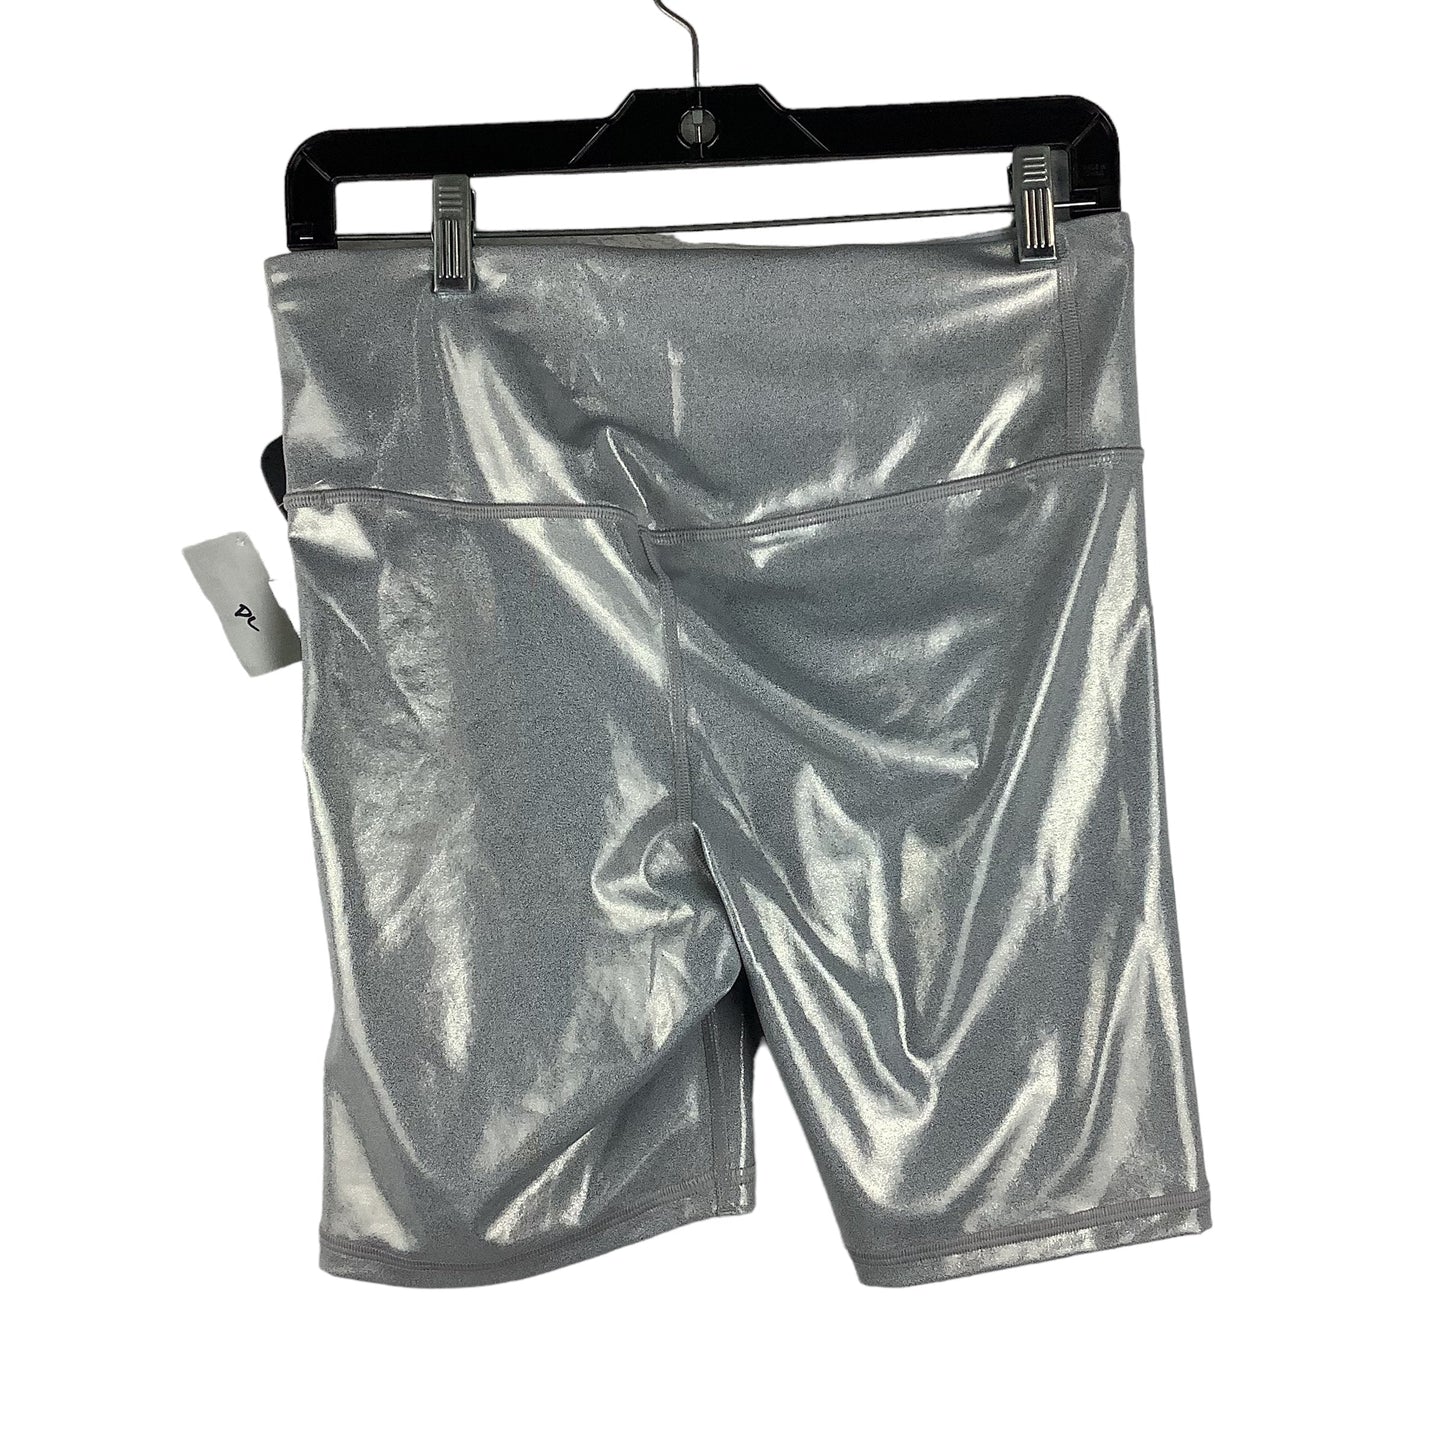 Grey Athletic Shorts Gapfit, Size M